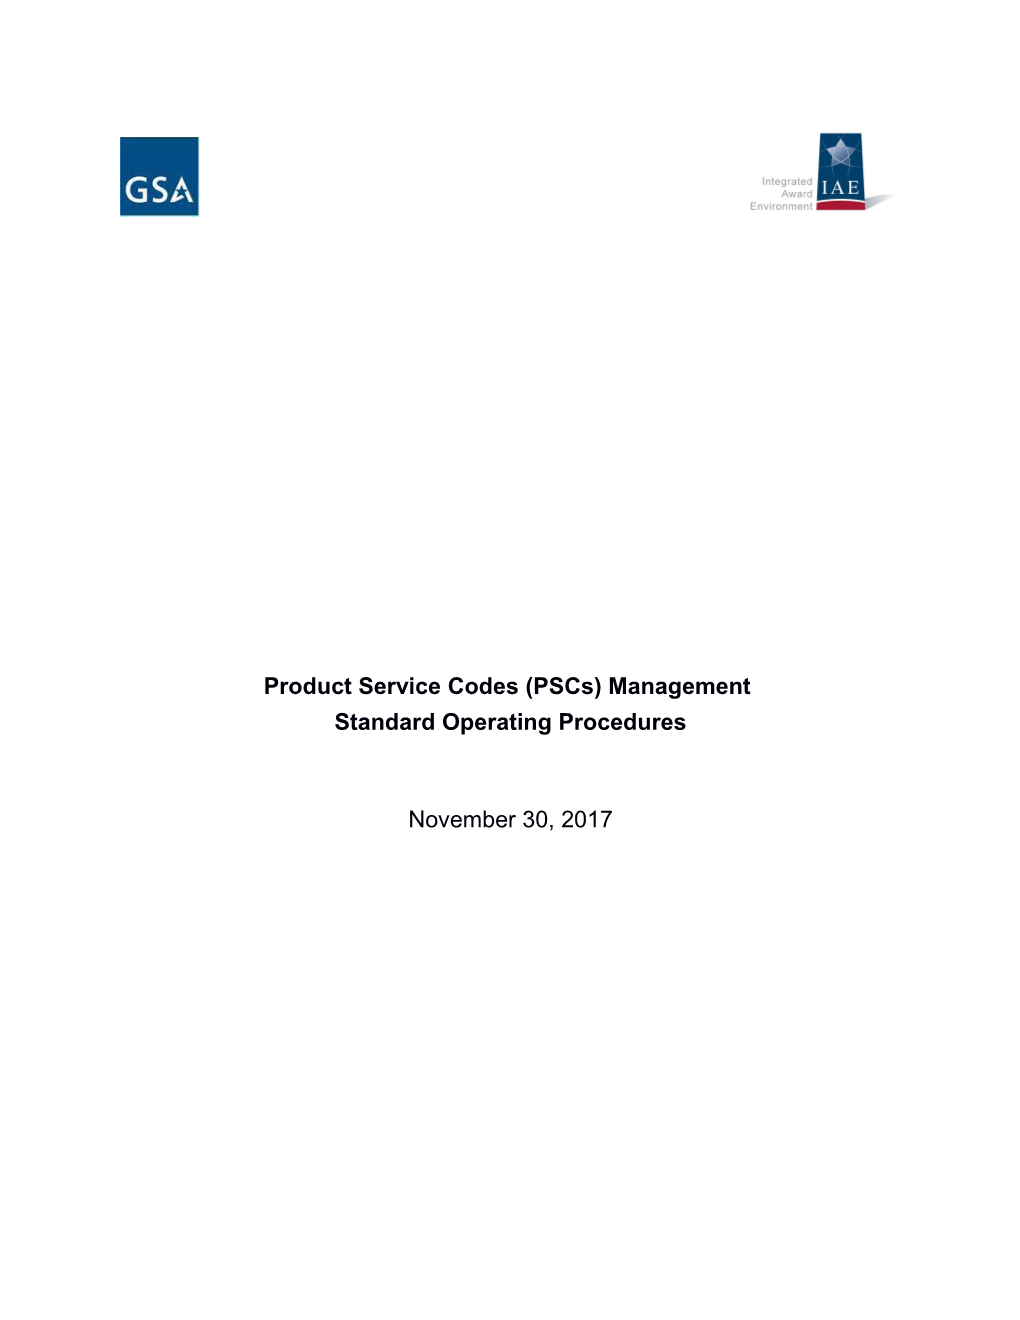 Product Service Codes (PSC) Management Standard Operating Procedurenovember 30, 2017